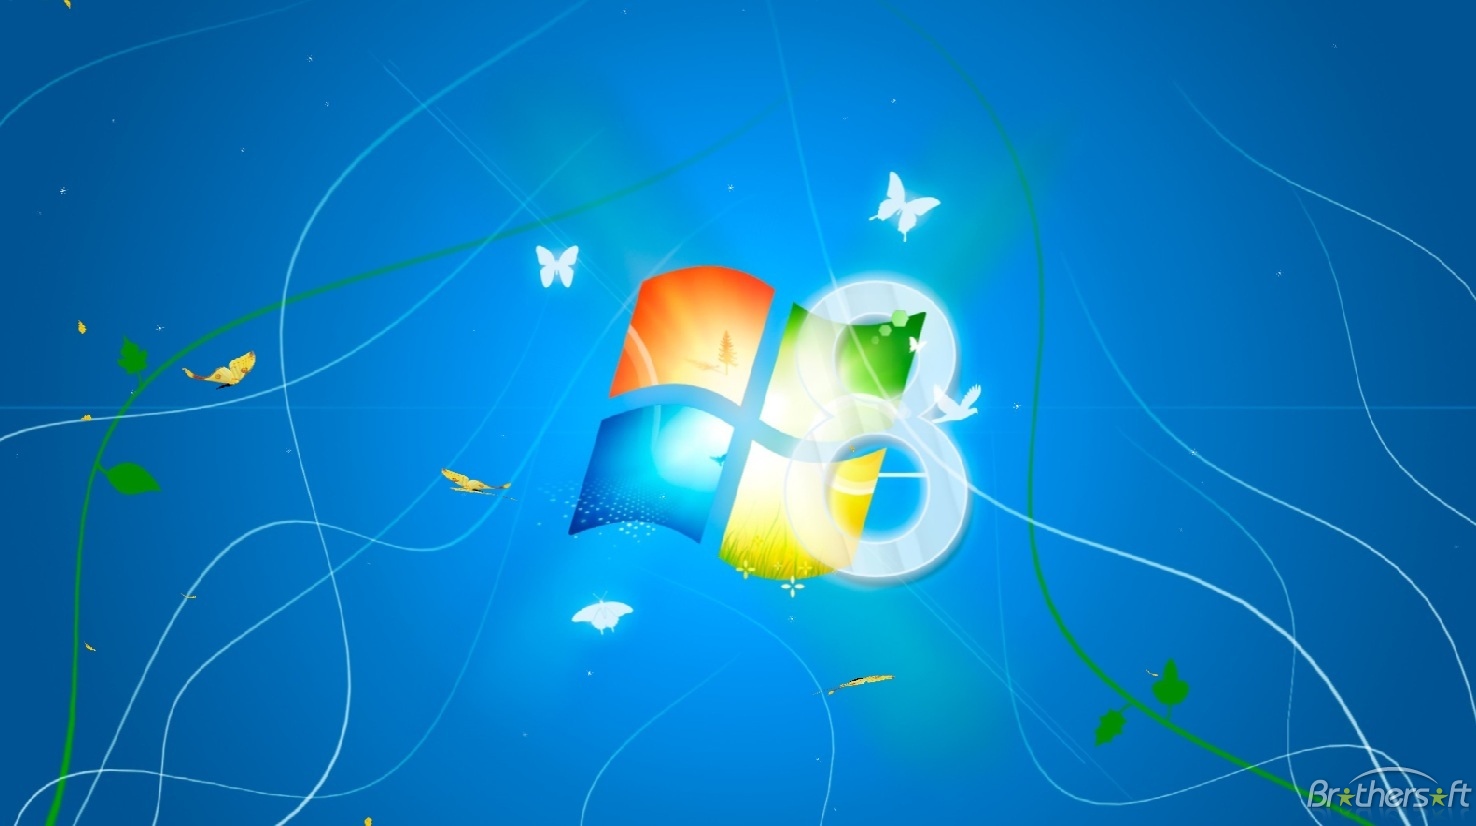 Windows 10 Logo Animated Wallpaper - WallpaperSafari